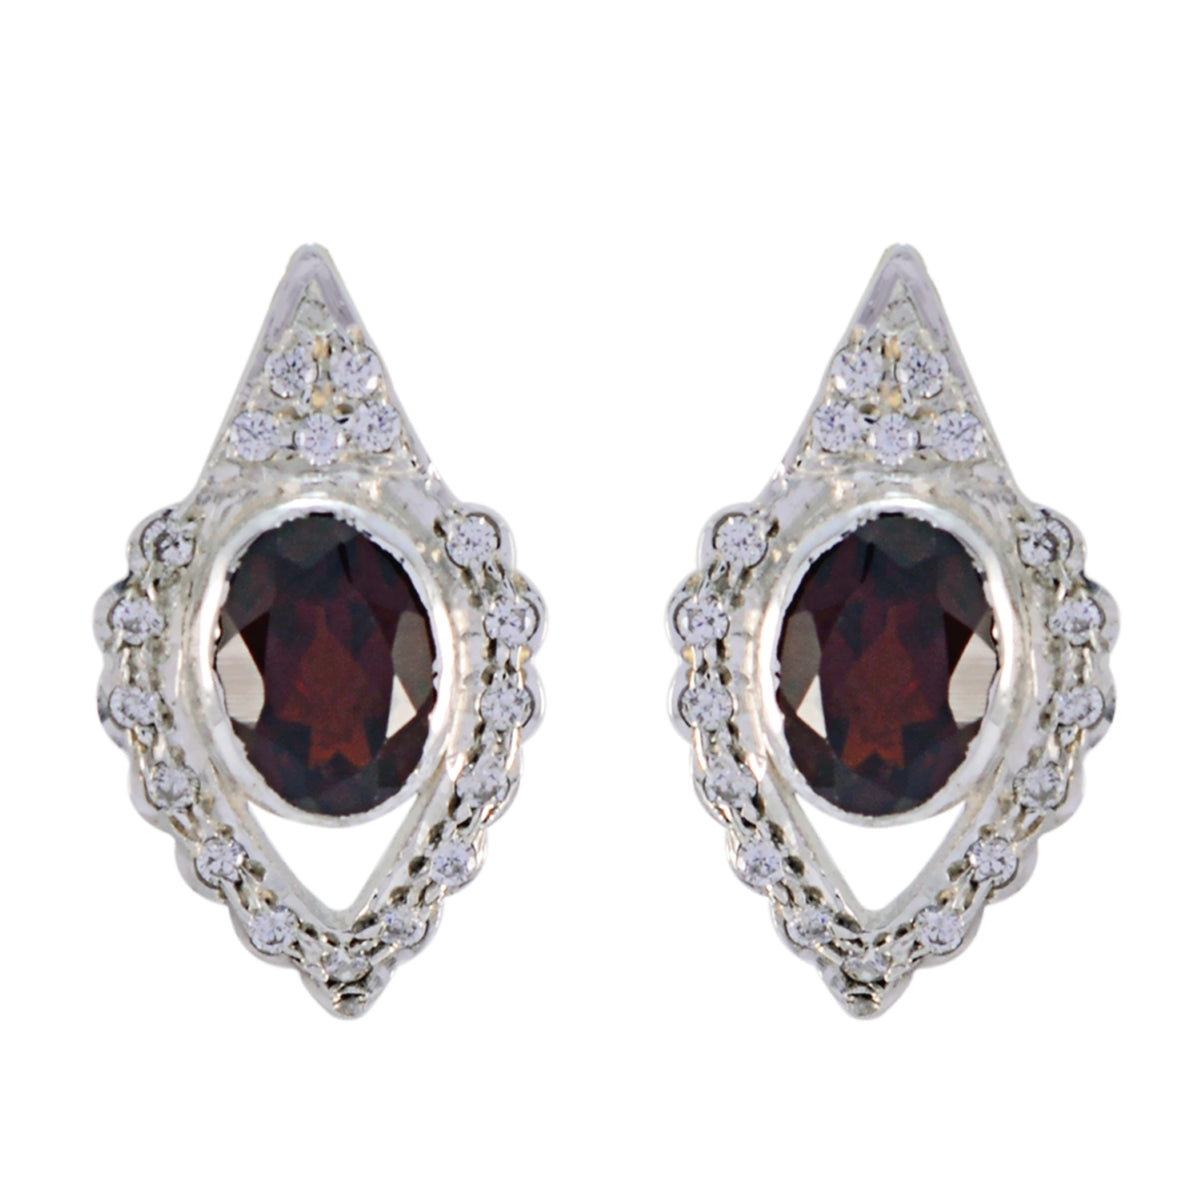 Riyo Genuine Gems oval Faceted Red Garnet Silver Earrings gift for wife